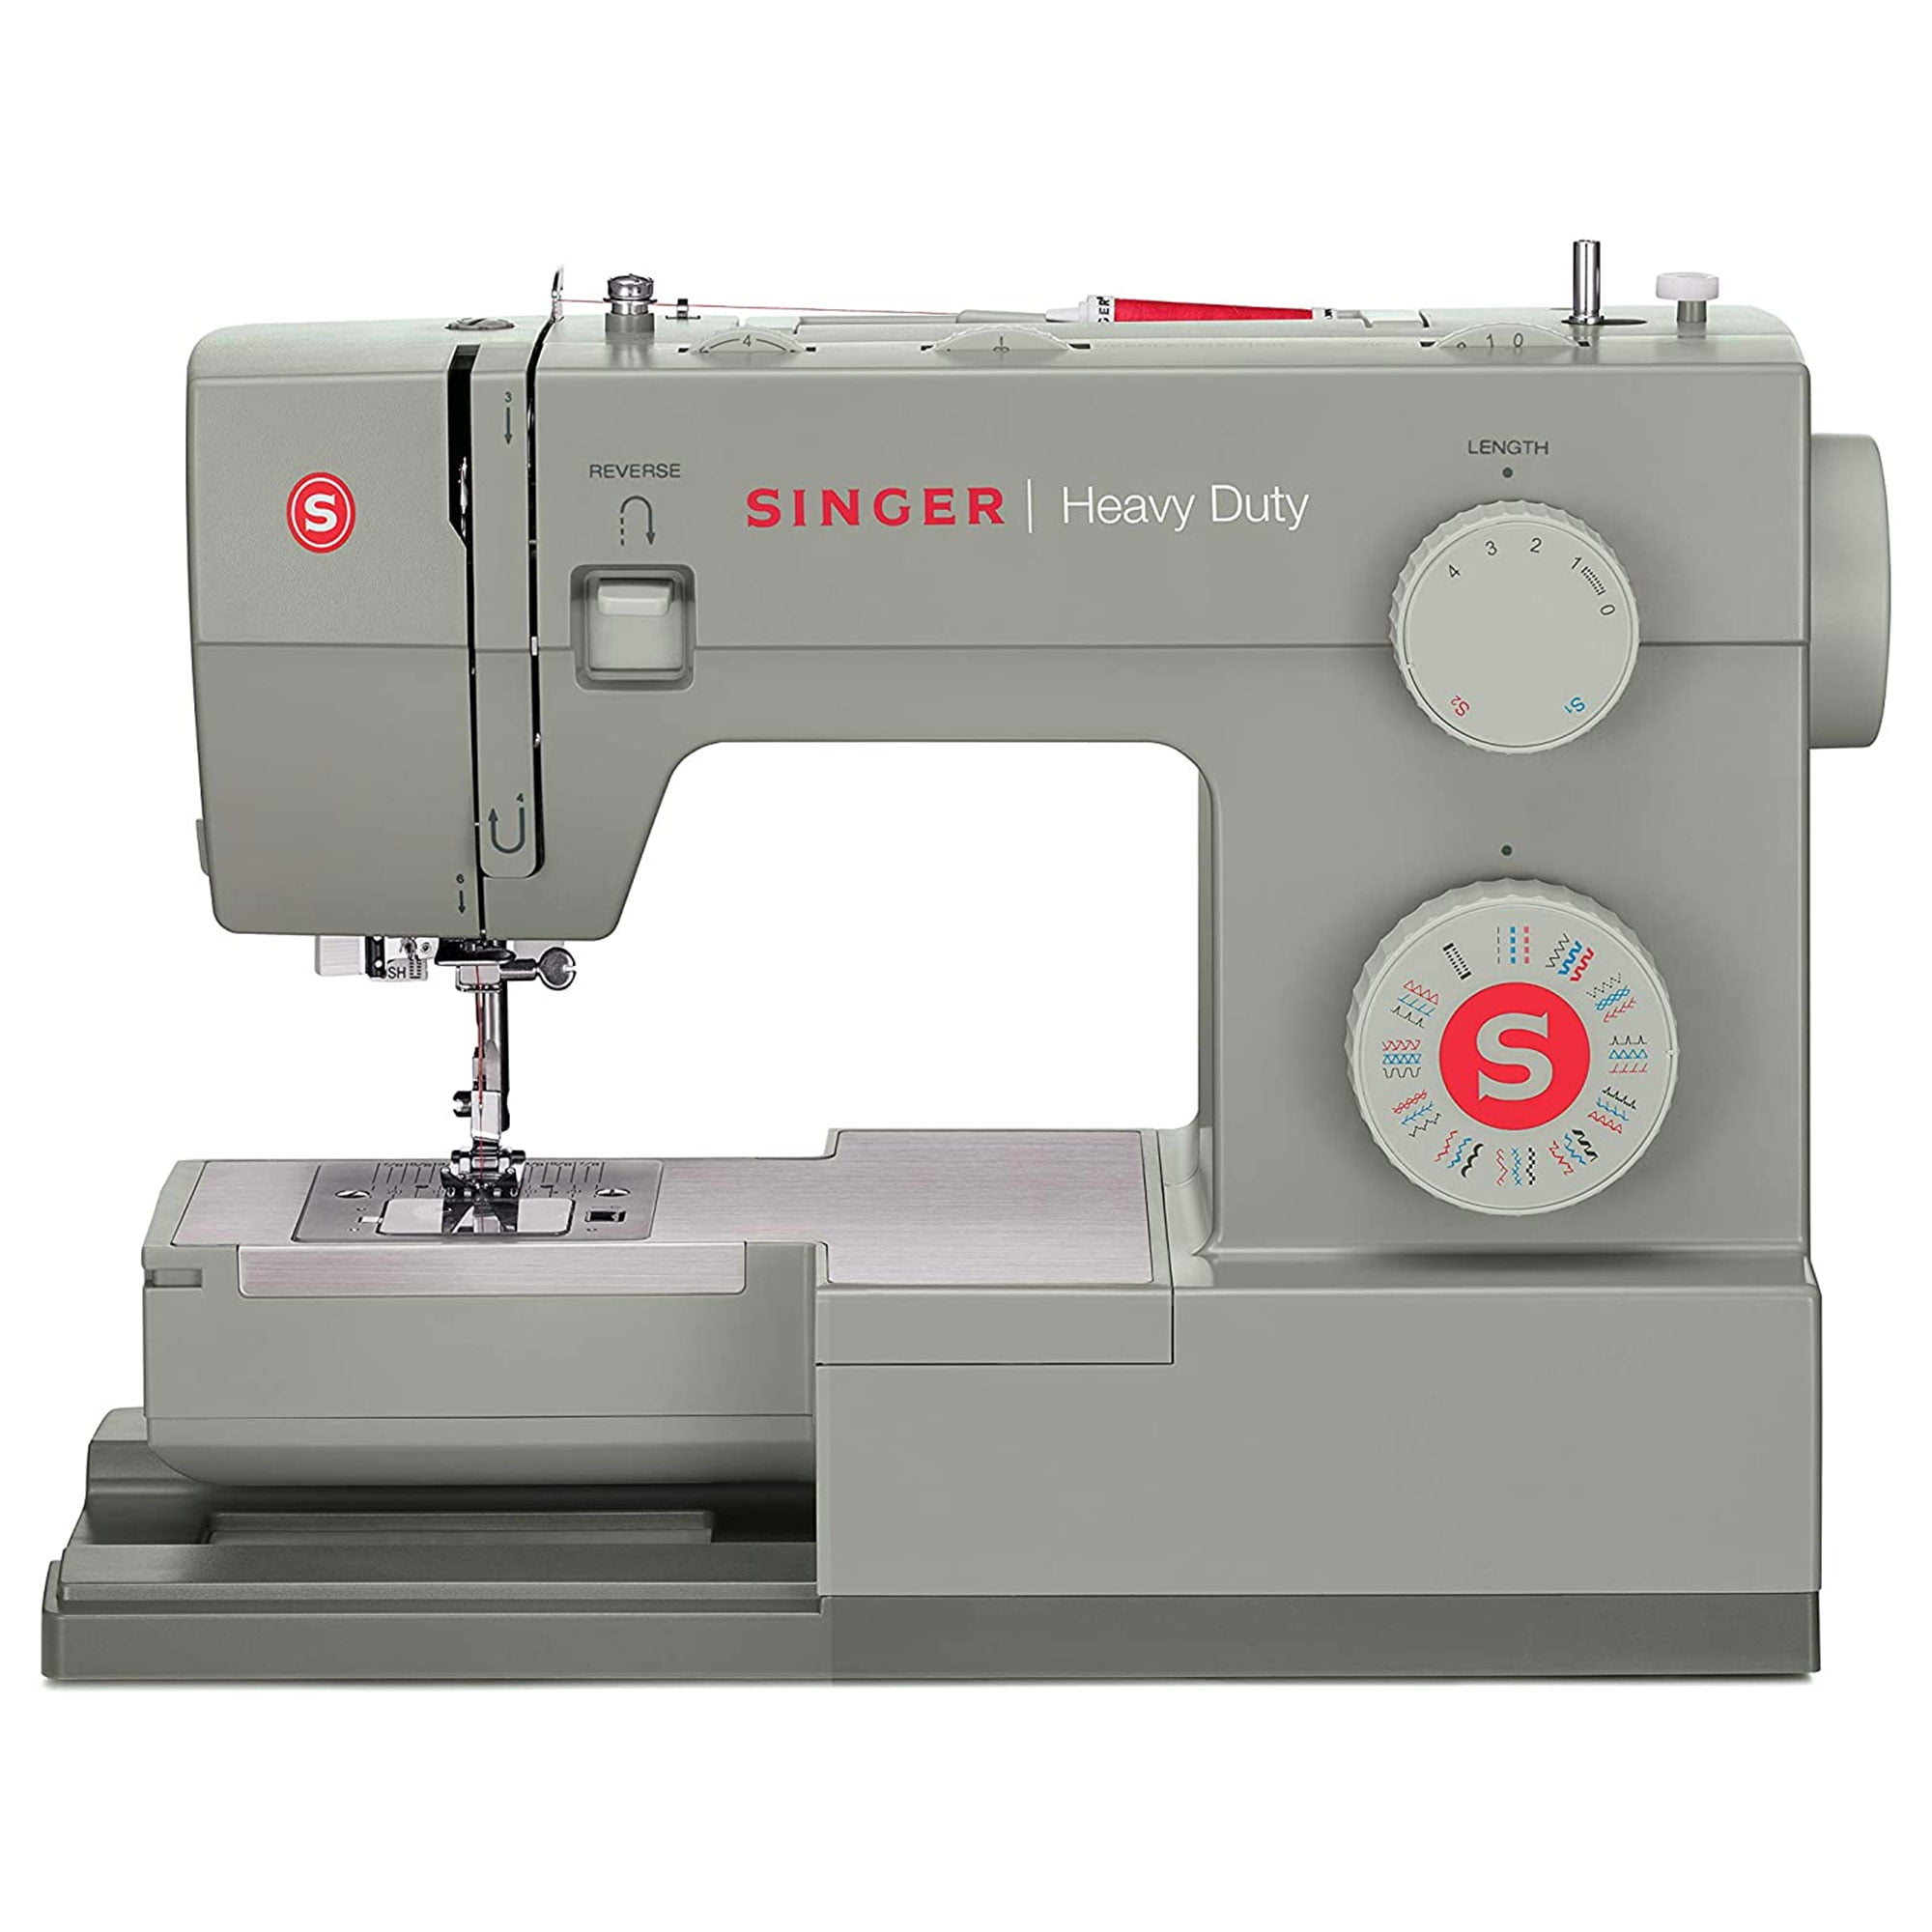 Heavy Duty Singer 4452 Sewing Machine for Sale in Dallas, TX - OfferUp